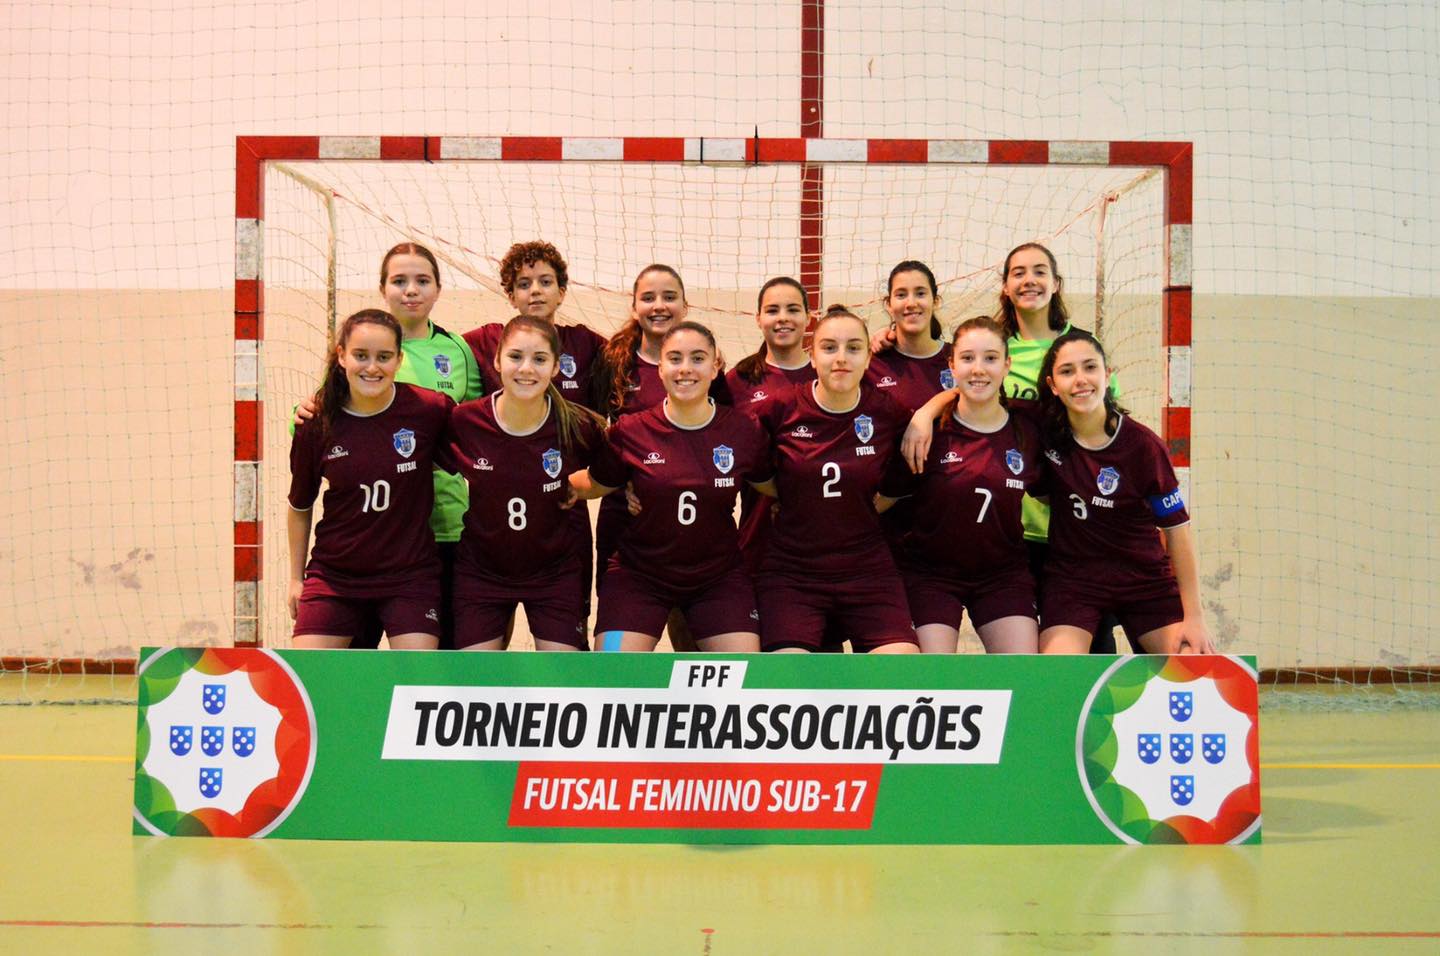 Torneio Interassociações de futsal feminino sub-17 terminou hoje